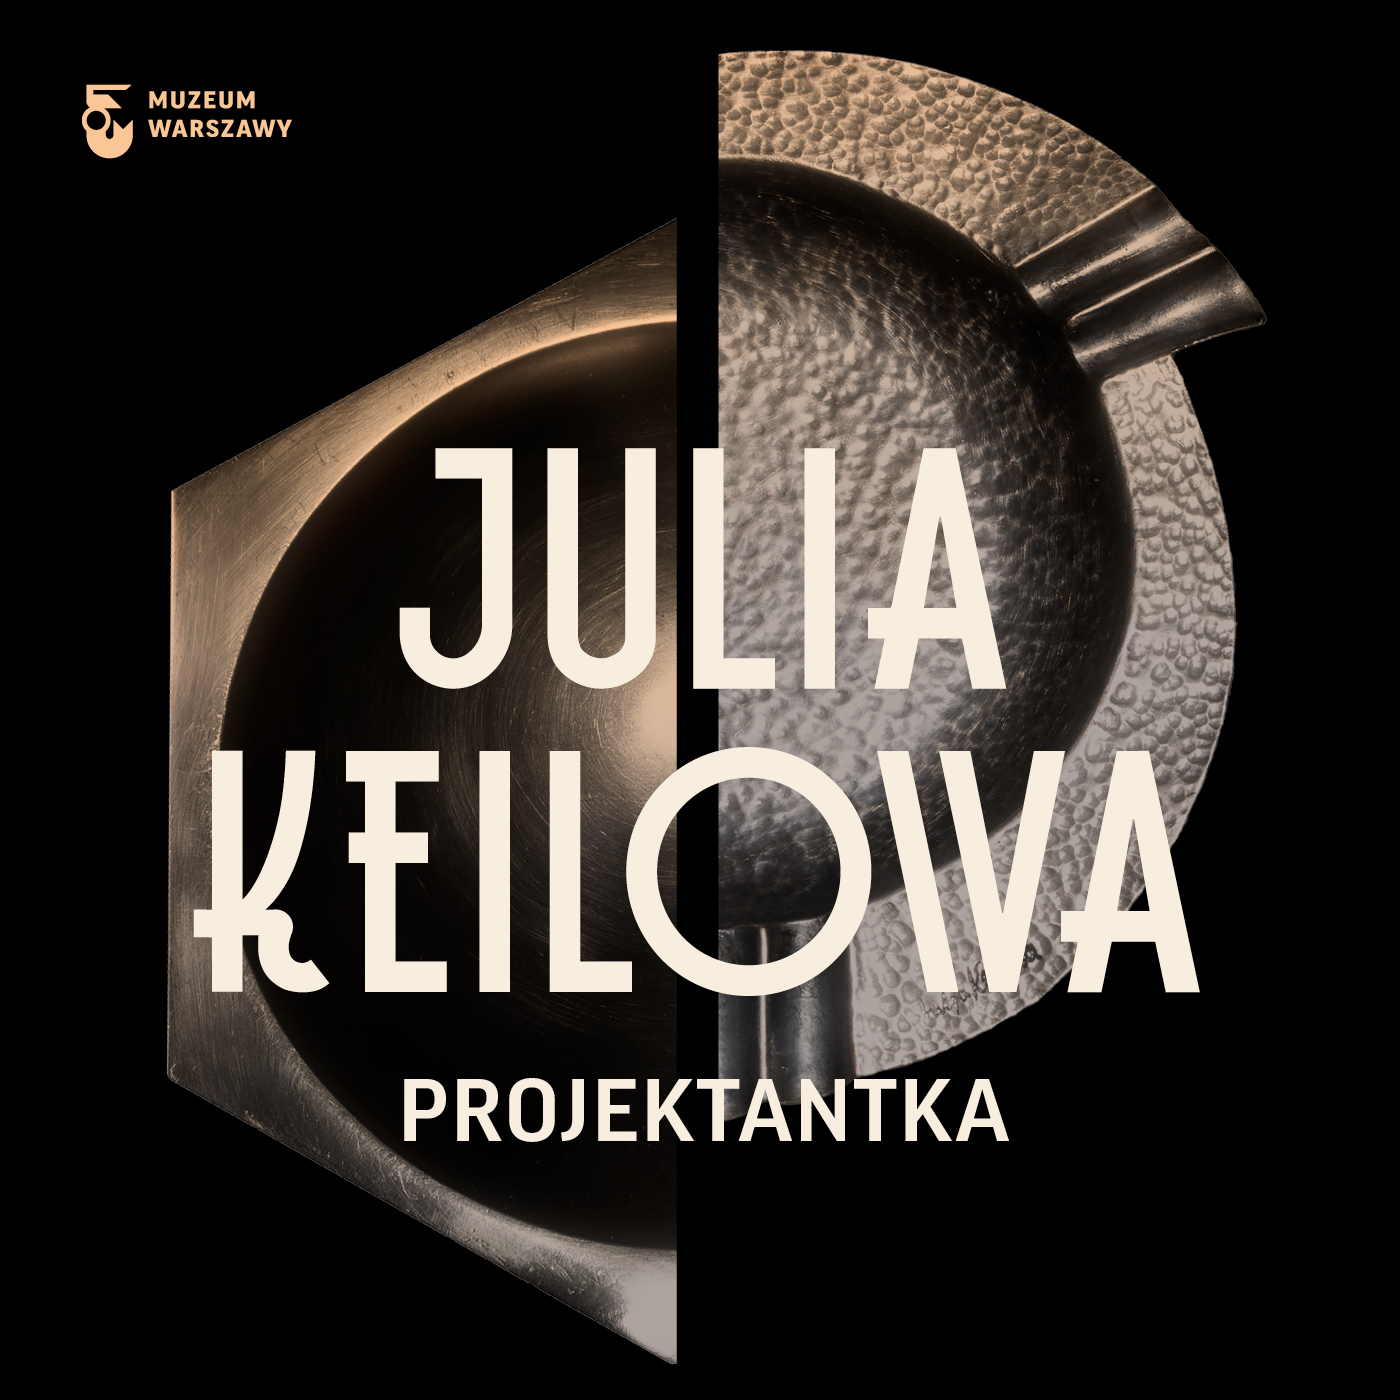 Julia Keilowa. Projektantka.